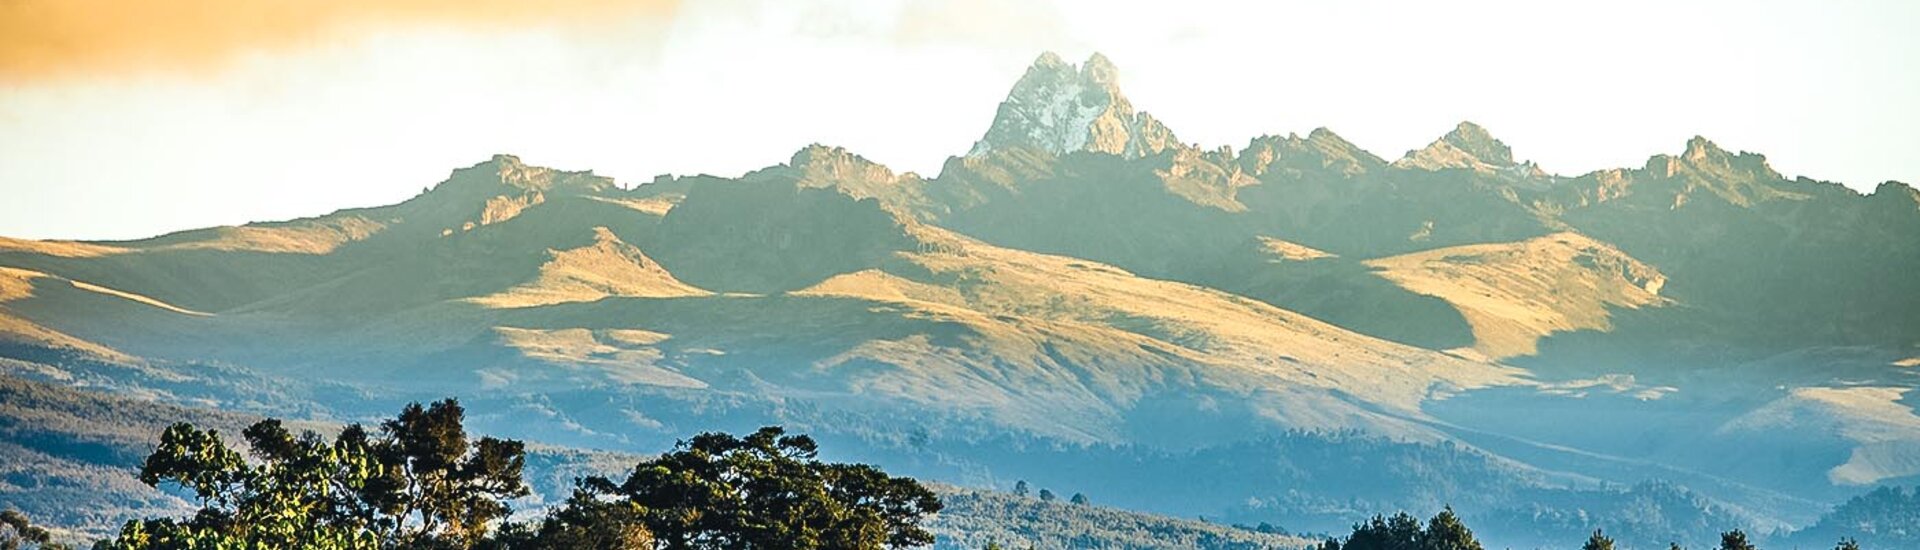 Panorama des Mount Kenias, Kenia